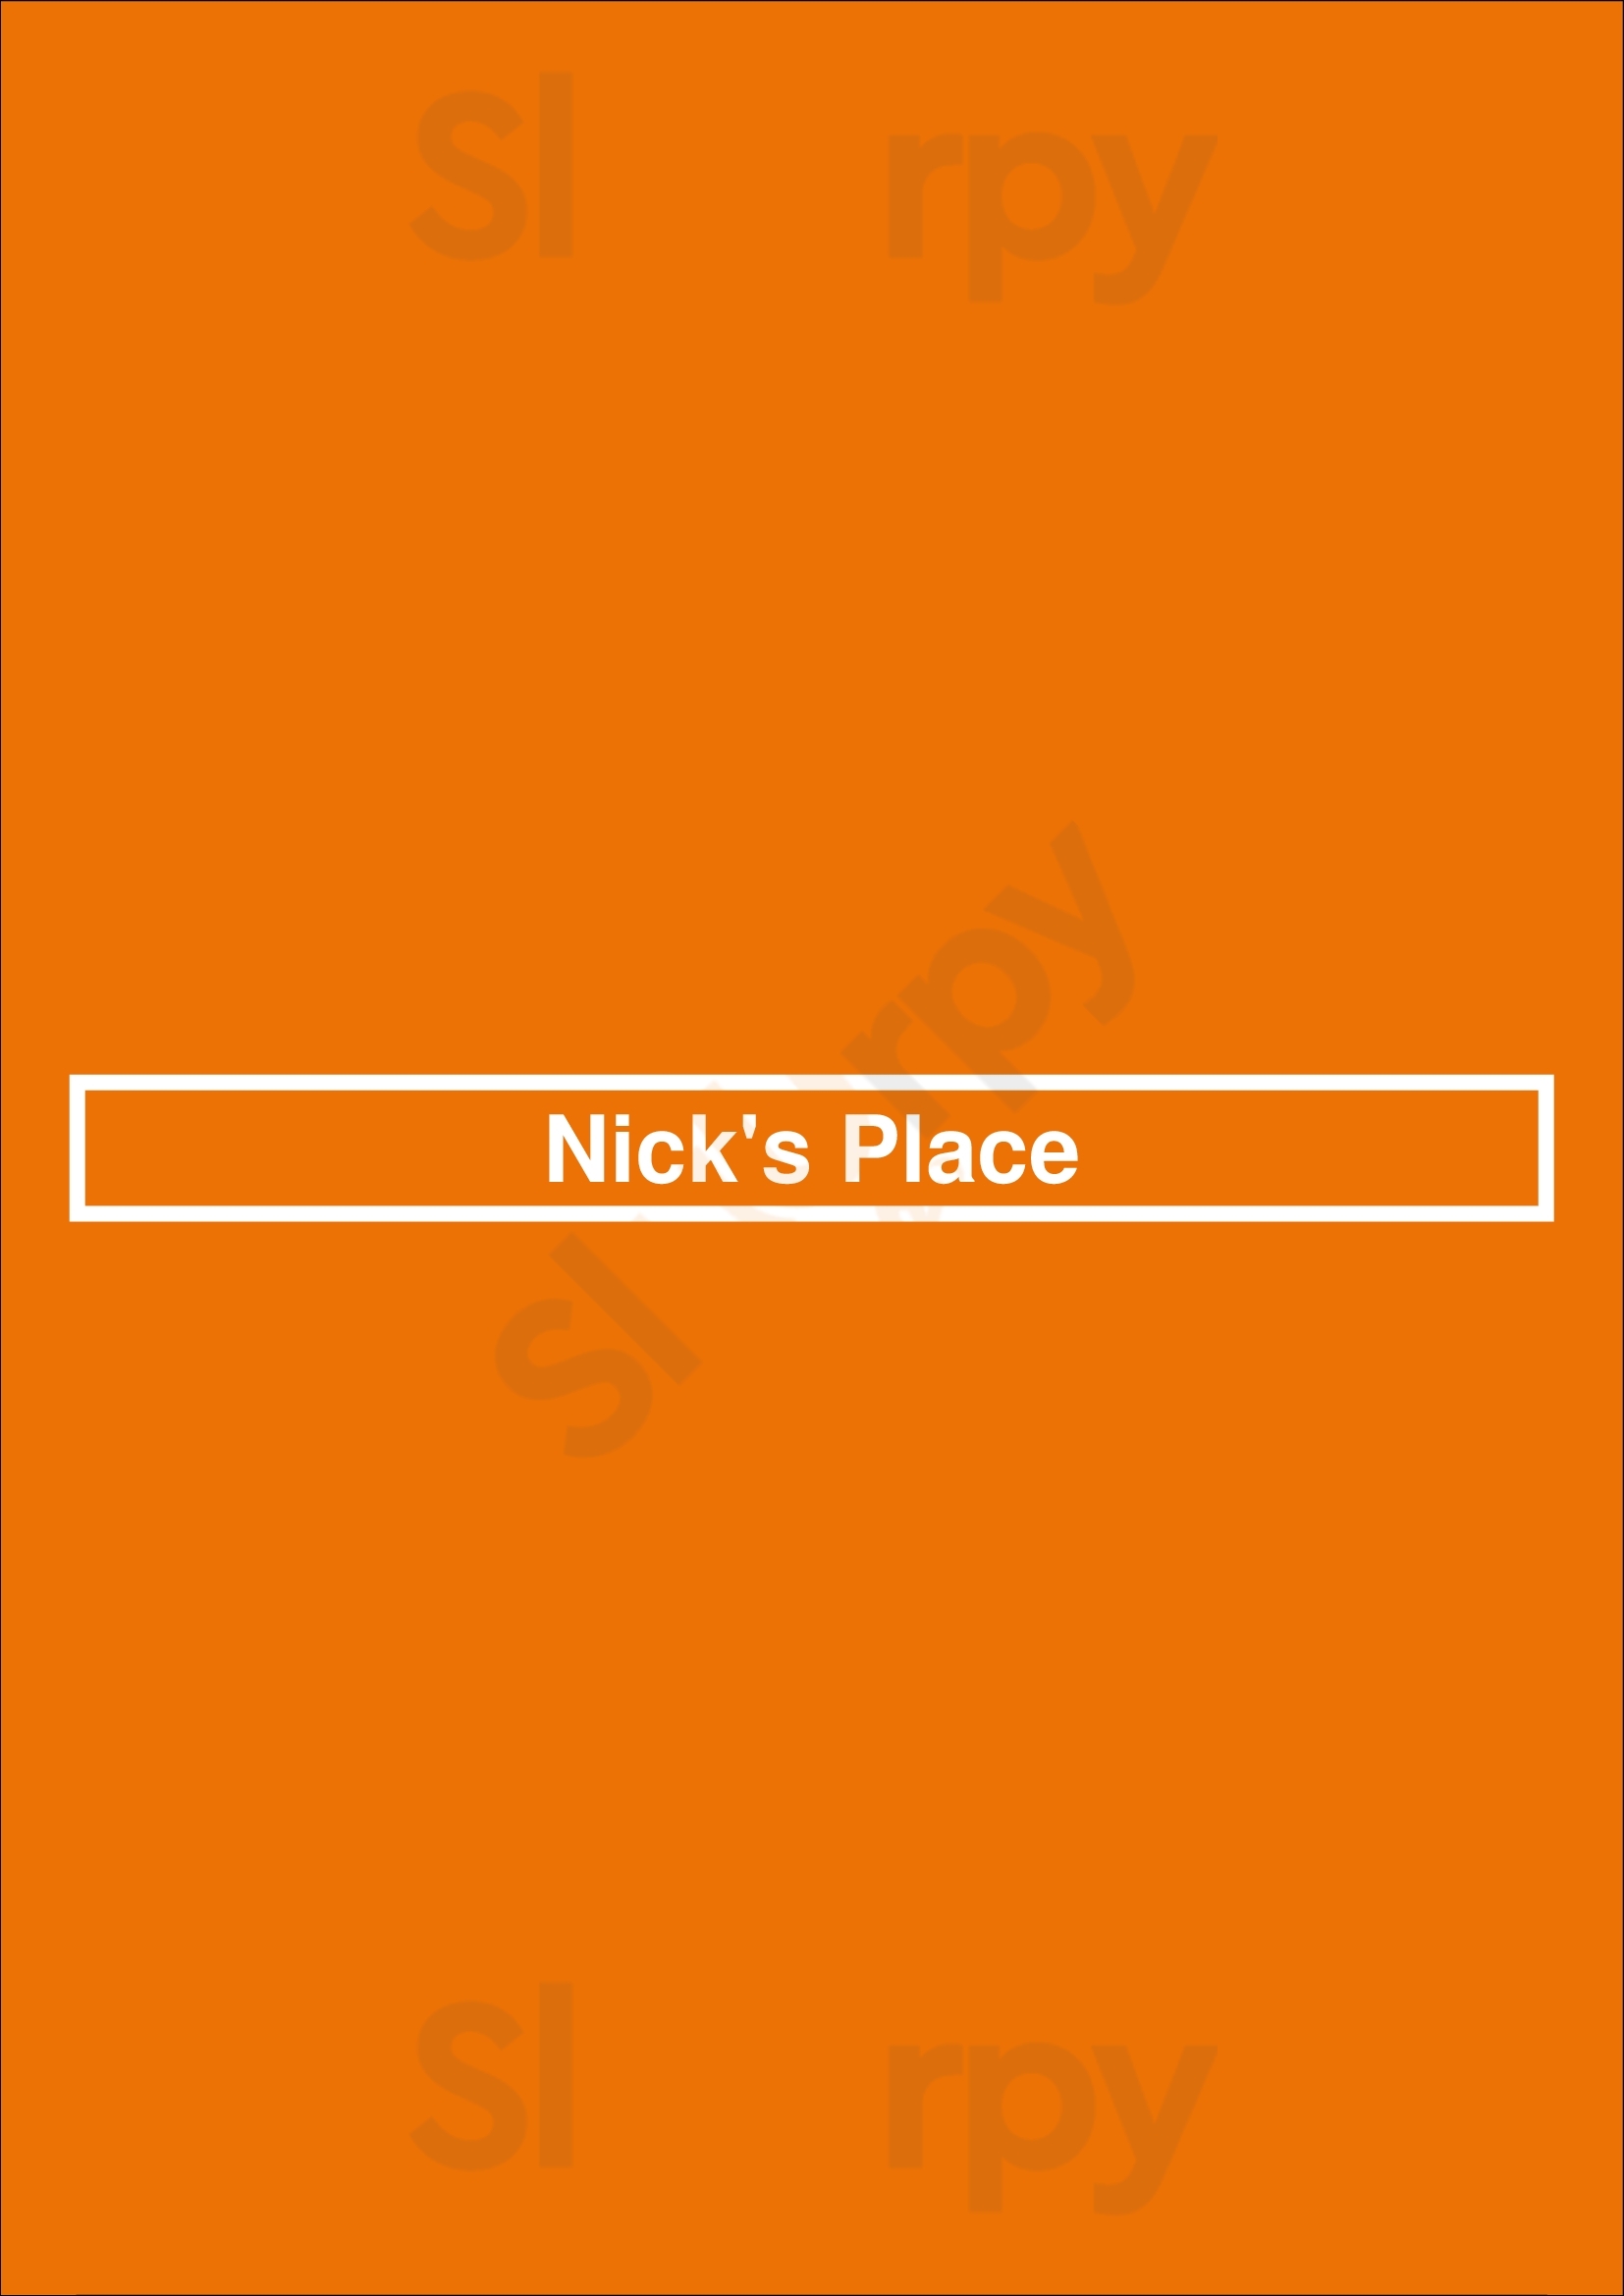 Nick's Place Houston Menu - 1